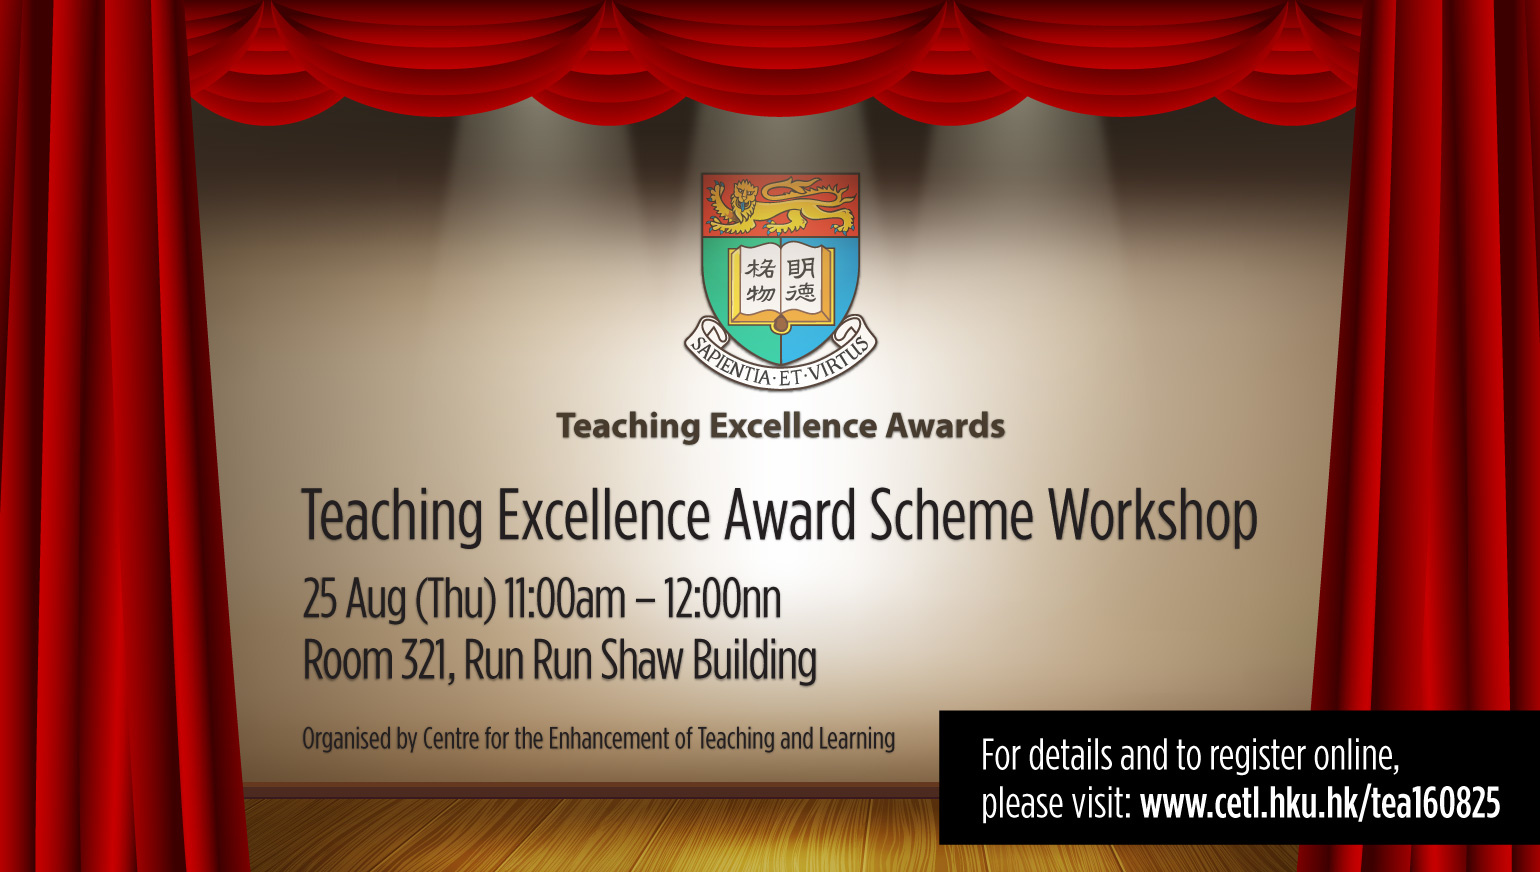  Teaching Excellence Award Scheme Workshop